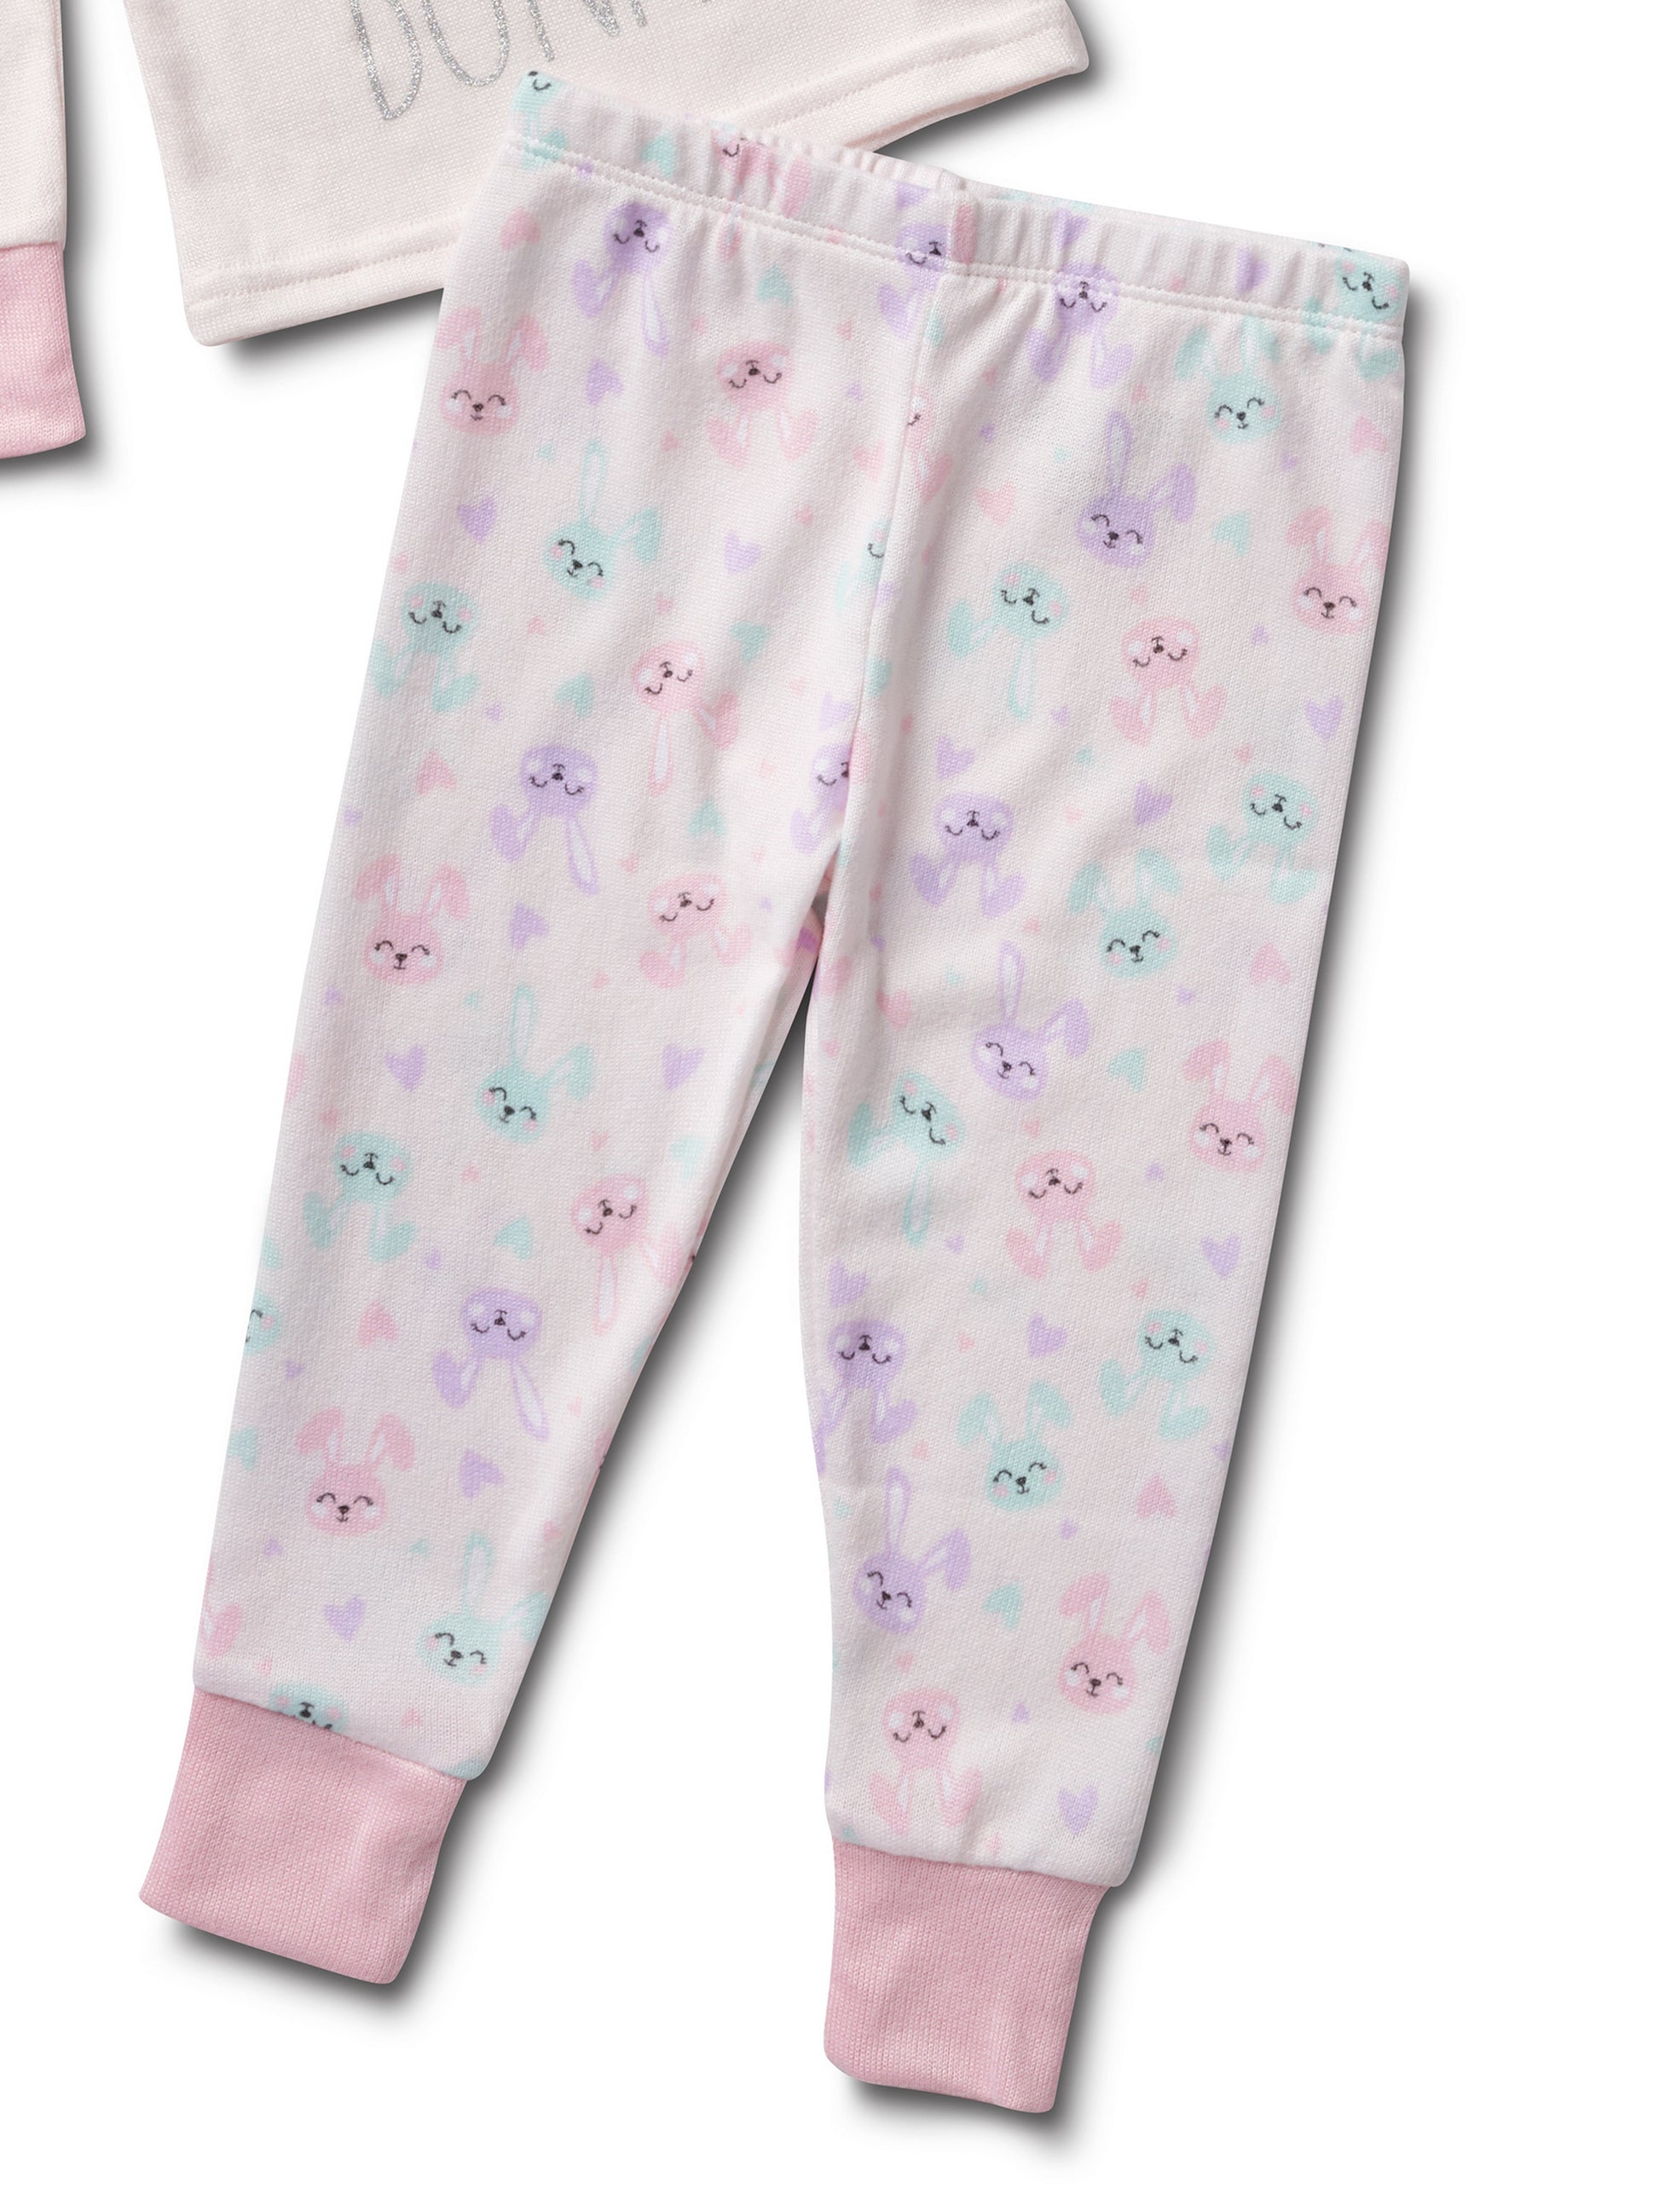 Girls' "MAMA'S SNUGGLE BUNNY" Long Sleeve Top and Elastic Waistband Joggers Pajama Set - Rae Dunn Wear - G Pant Set